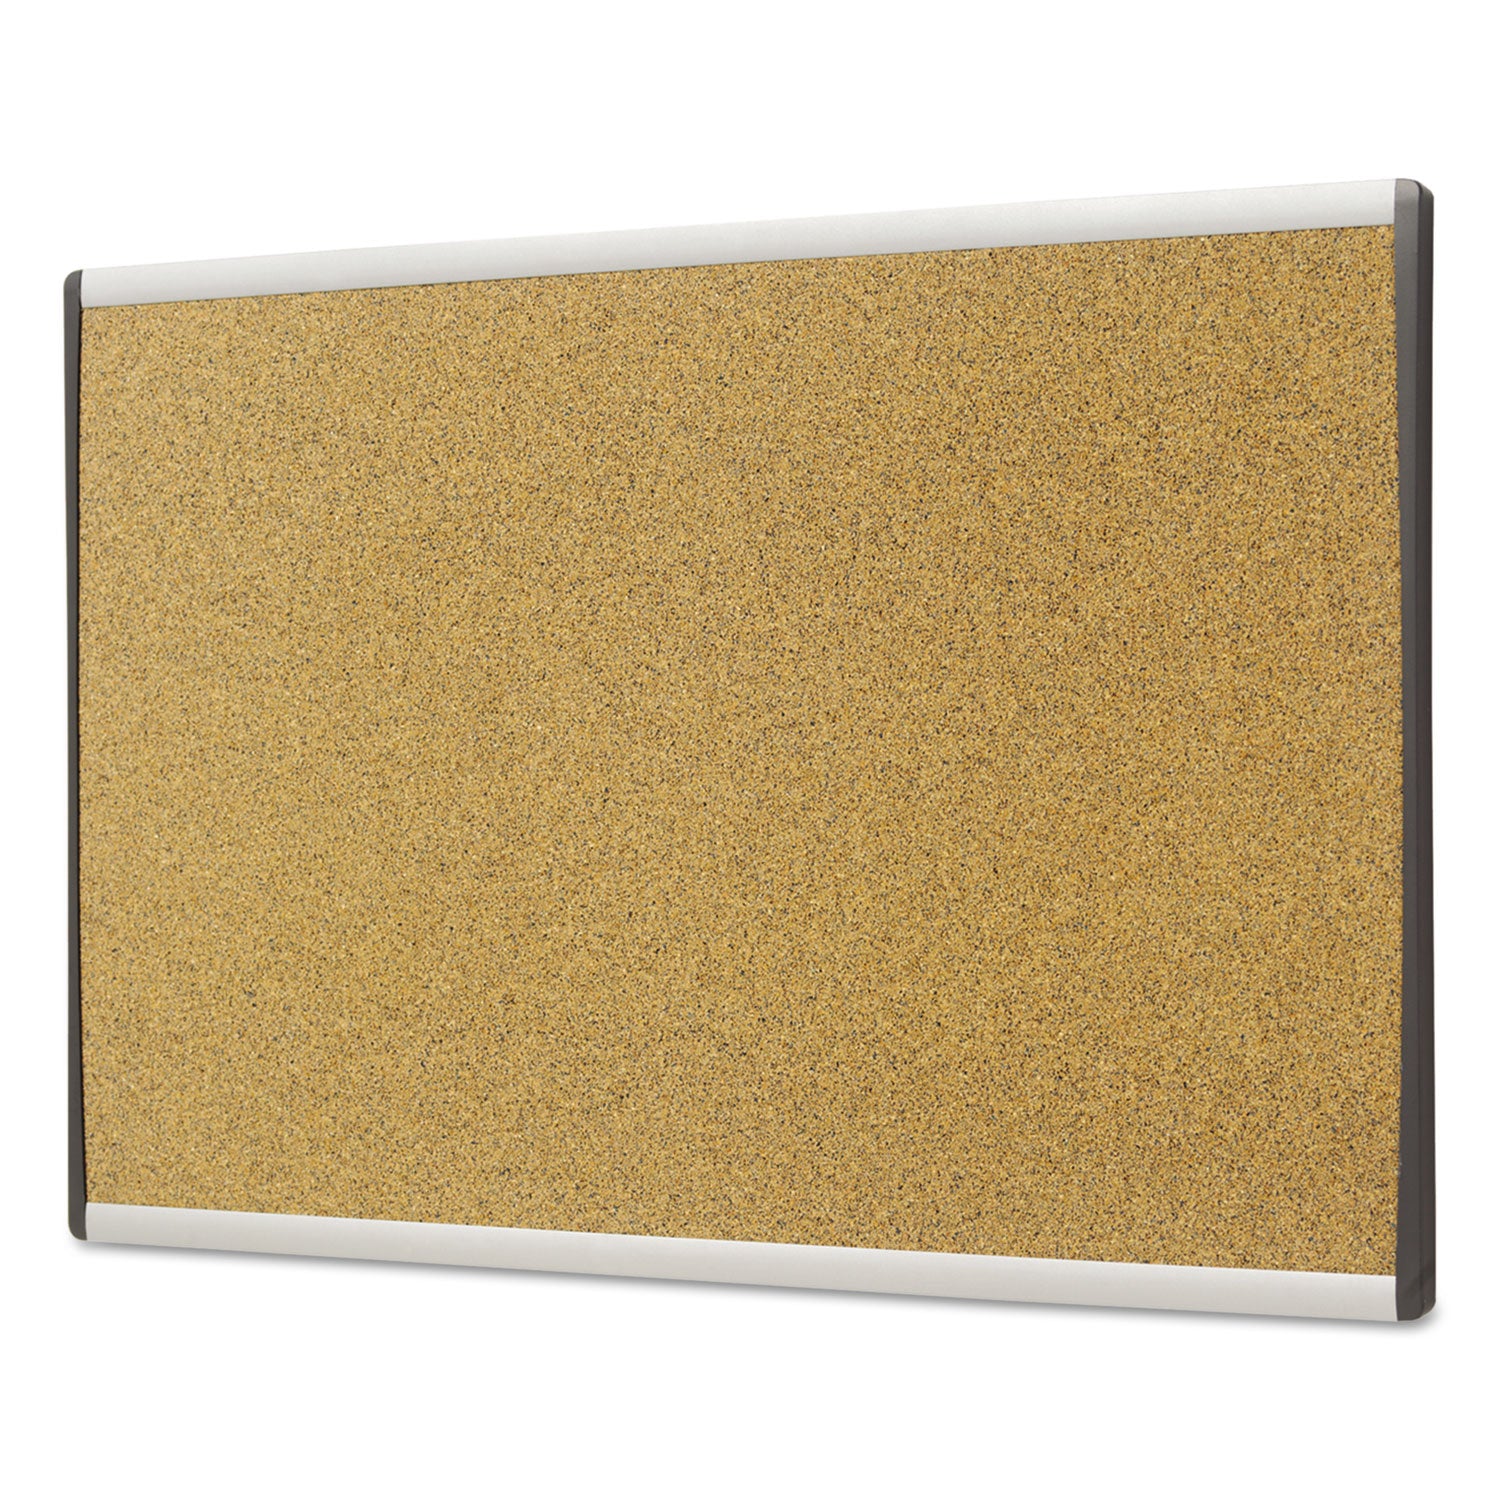 ARC Frame Cubicle Cork Board, 30 x 18, Tan Surface, Silver Aluminum Frame - 